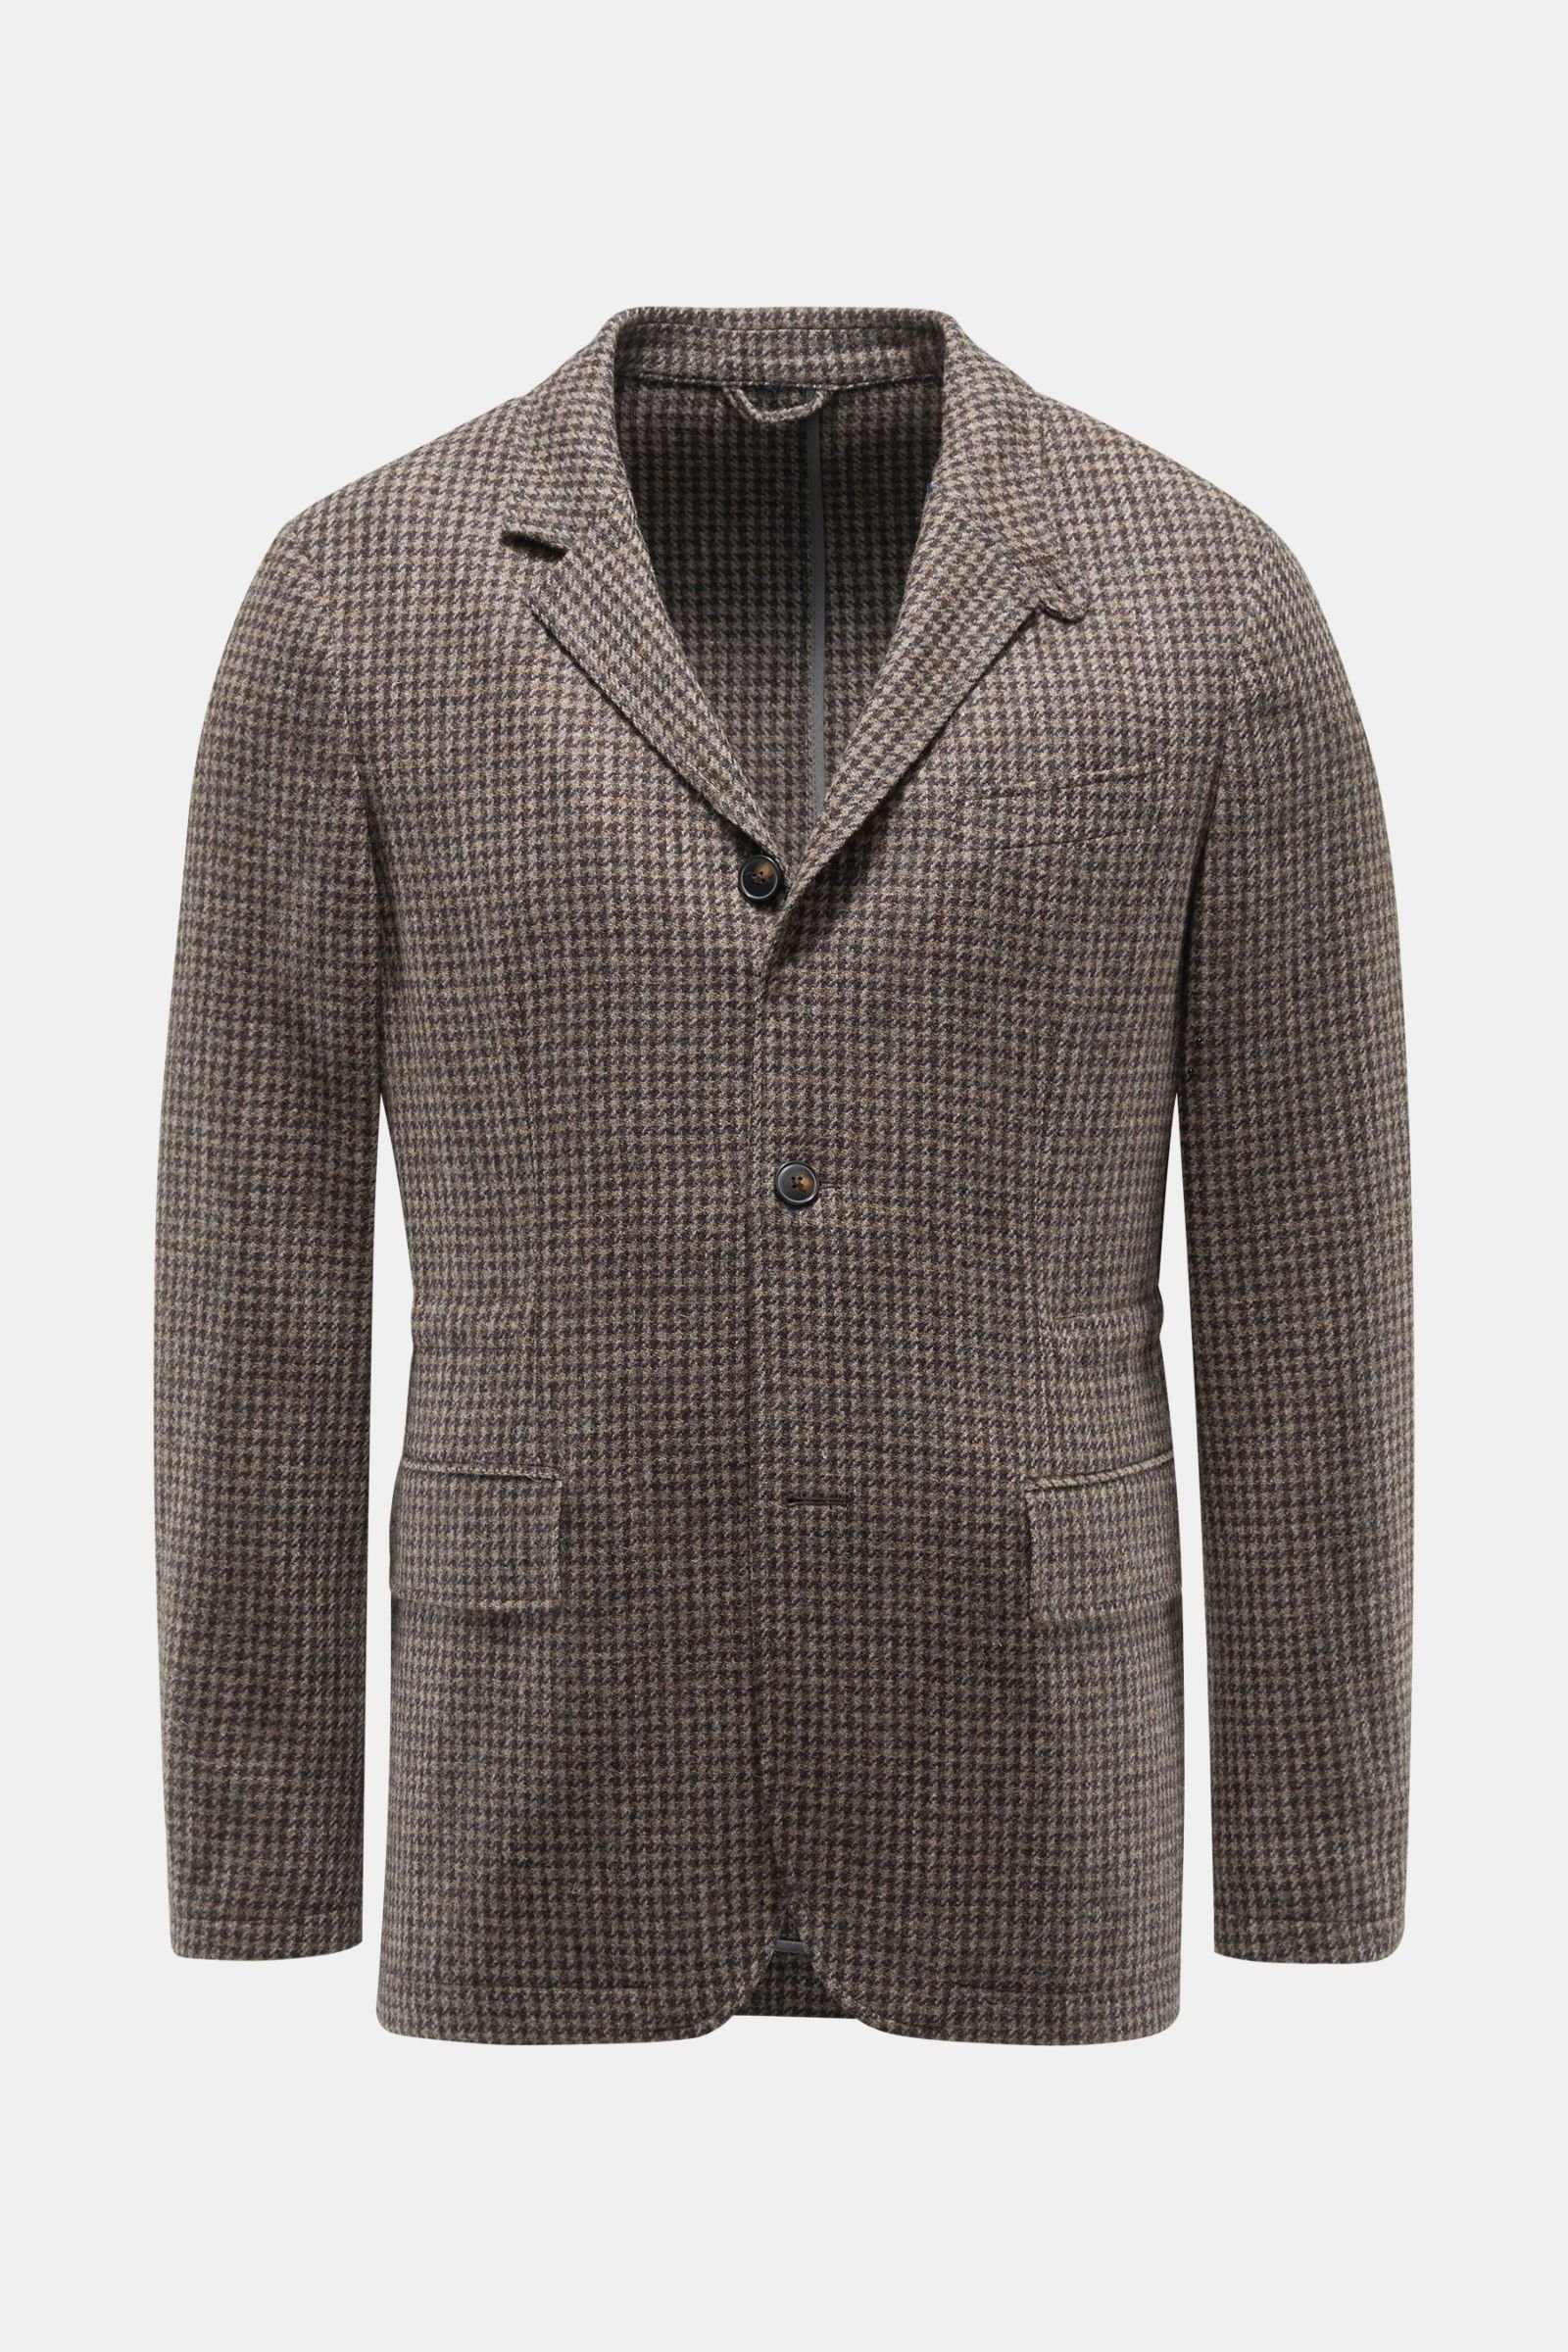 Smart-casual jacket grey-brown/dark brown checked